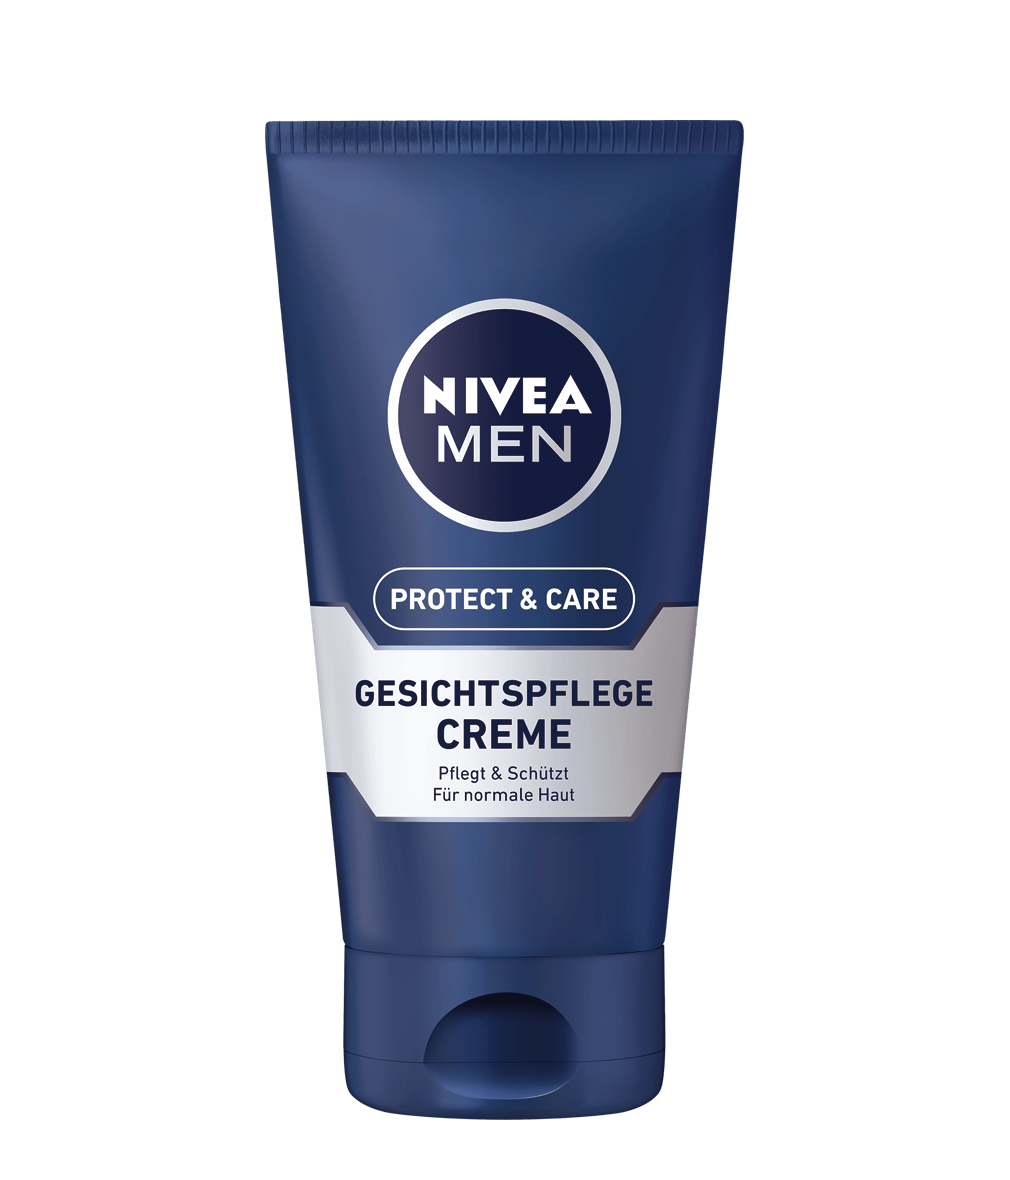 NIVEA MEN Protect & Care Gesichtspflege Creme